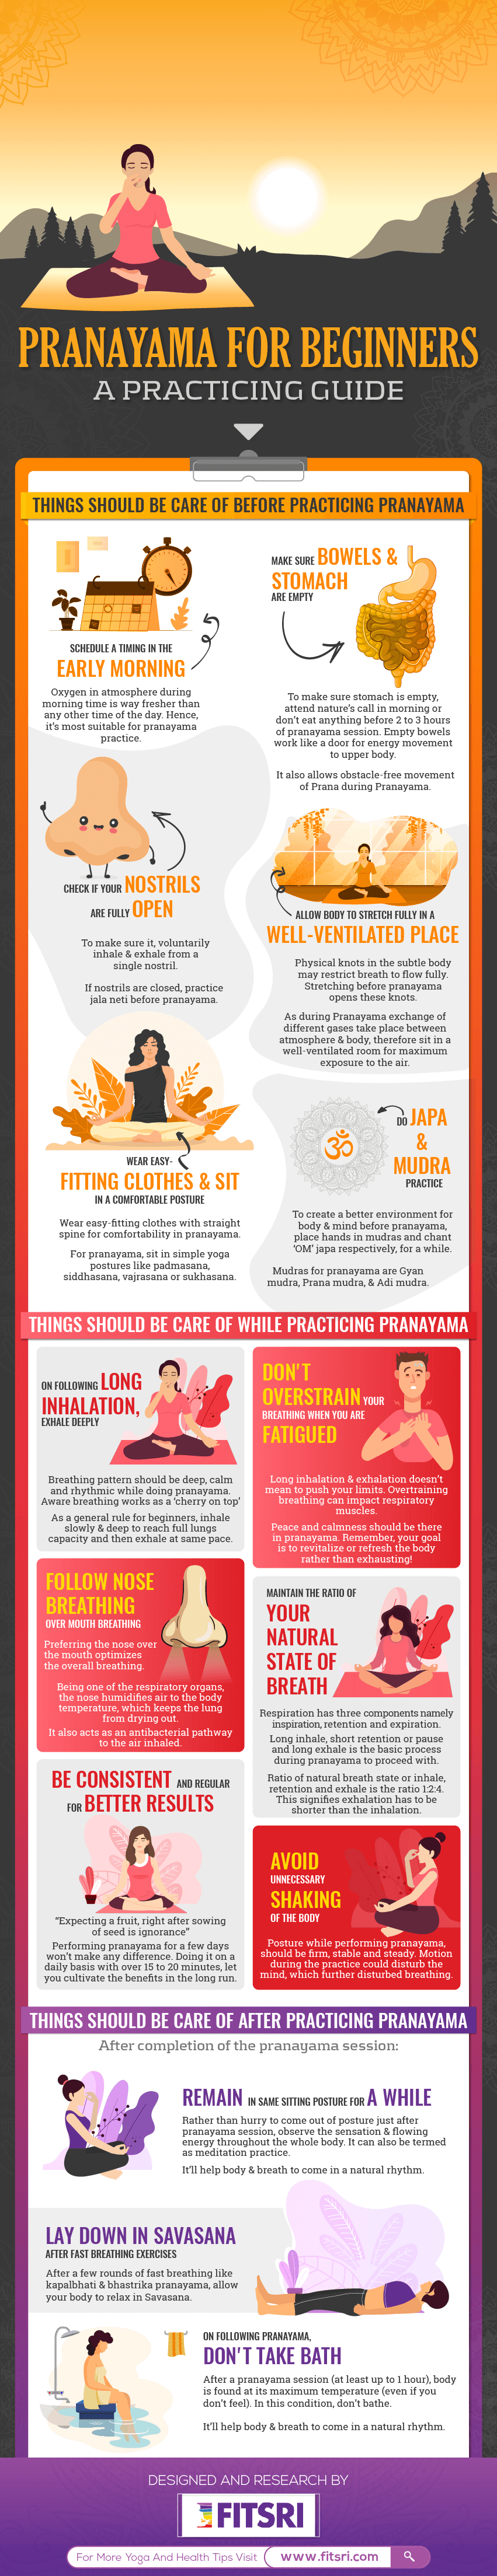 infographics - pranayama for beginner